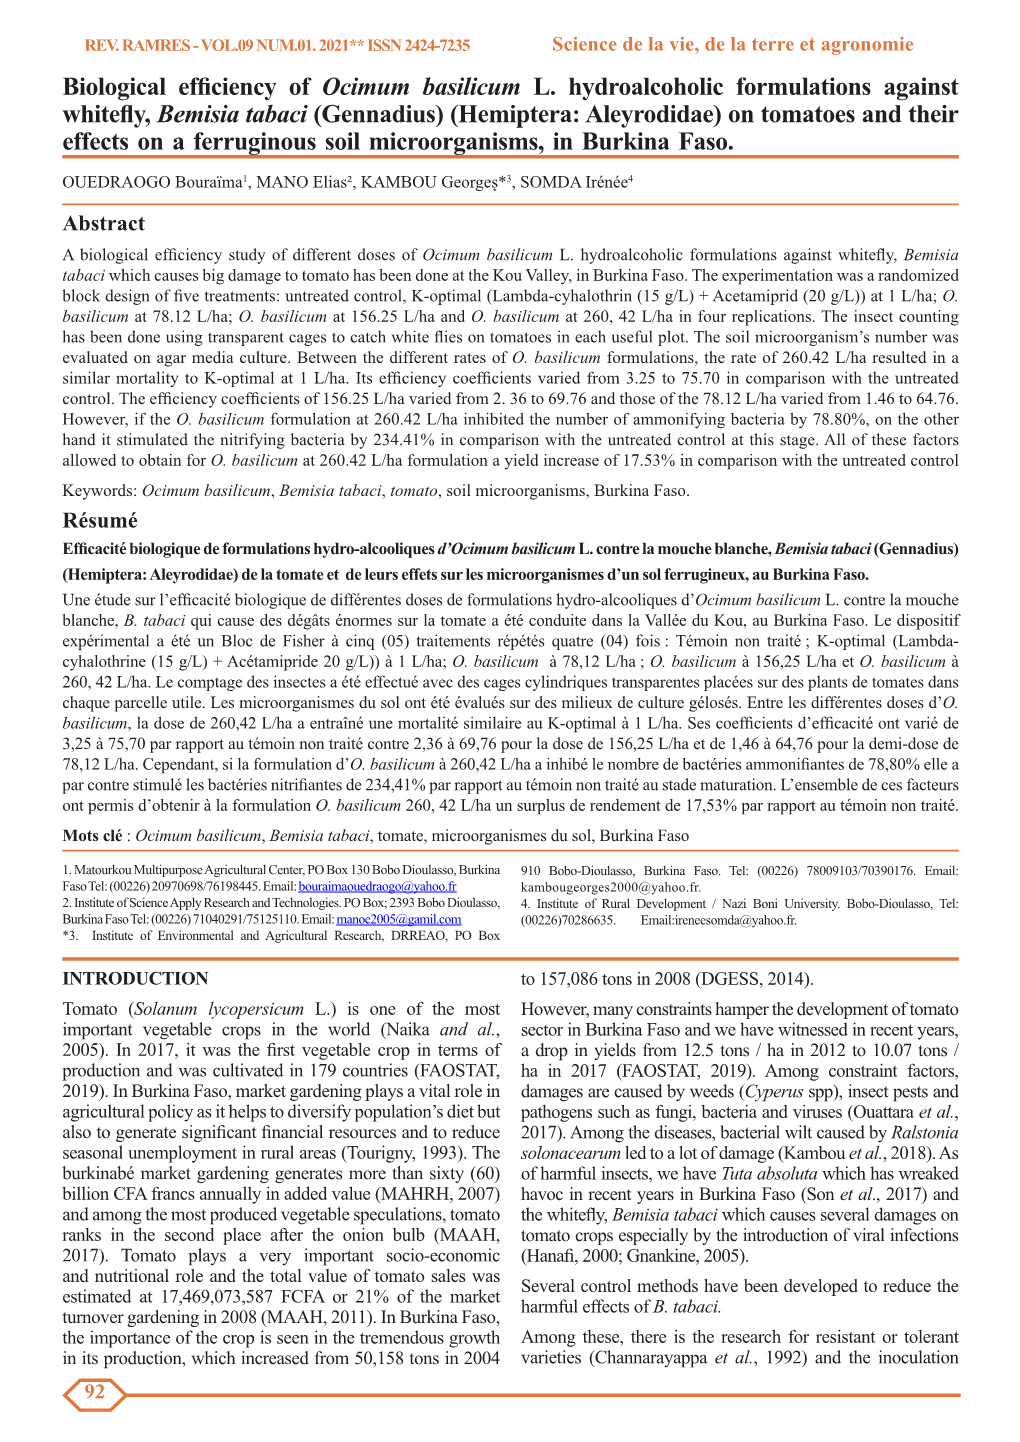 Biological Efficiency of Ocimum Basilicum L. Hydroalcoholic Formulations Against Whitefly, Bemisia Tabaci (Gennadius) (Hemipter